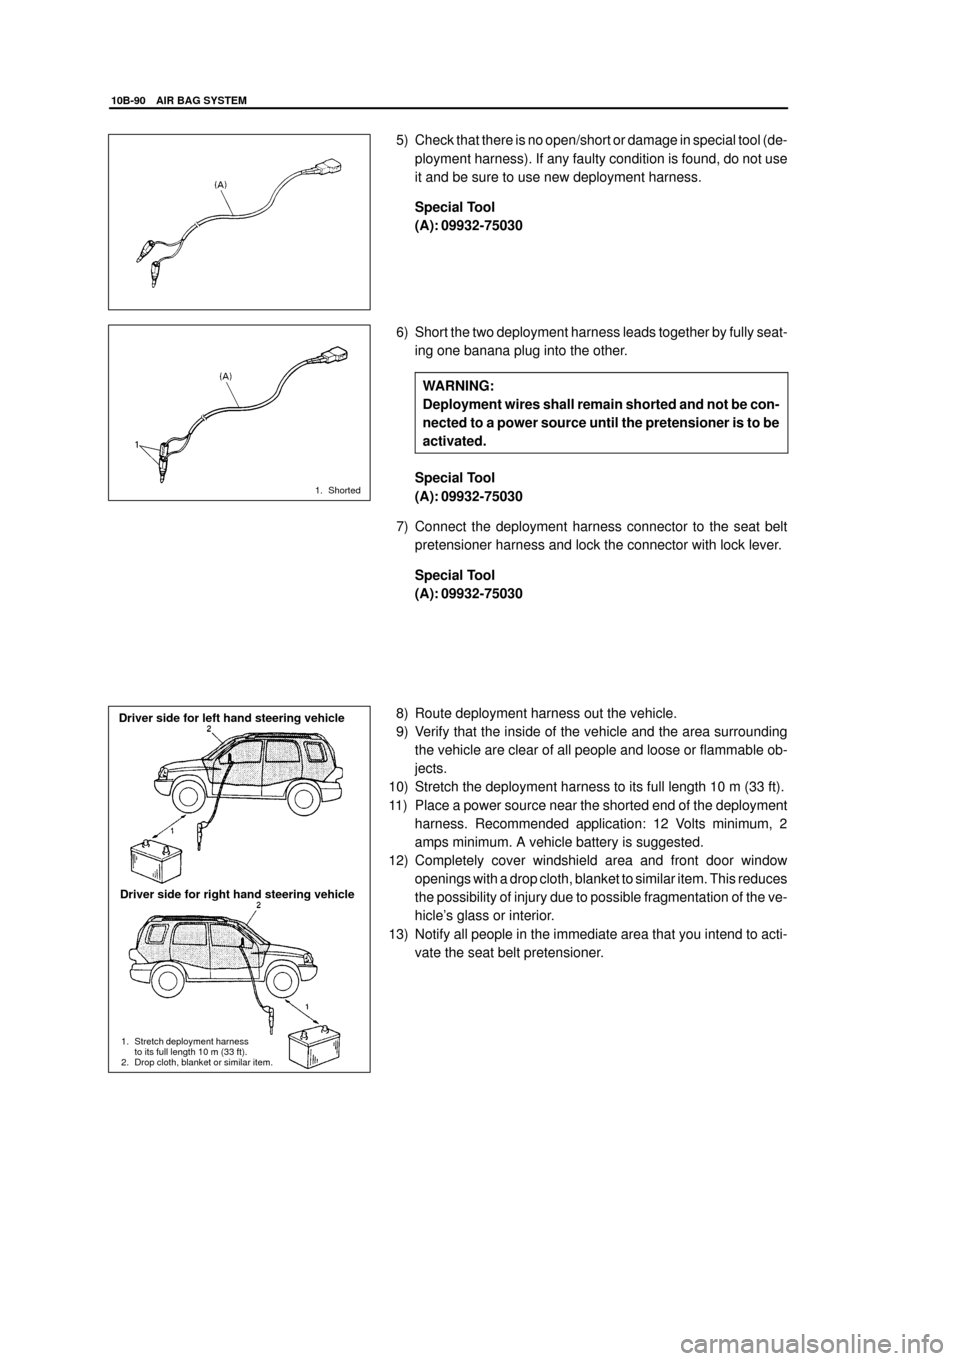 SUZUKI GRAND VITARA 1998 2.G Service Workshop Manual YH4
GRAND
VITARA
1. Shorted
Driver side for left hand steering vehicle
Driver side for right hand steering vehicle
1. Stretch deployment harness
to its full length 10 m (33 ft).
2. Drop cloth, blanket